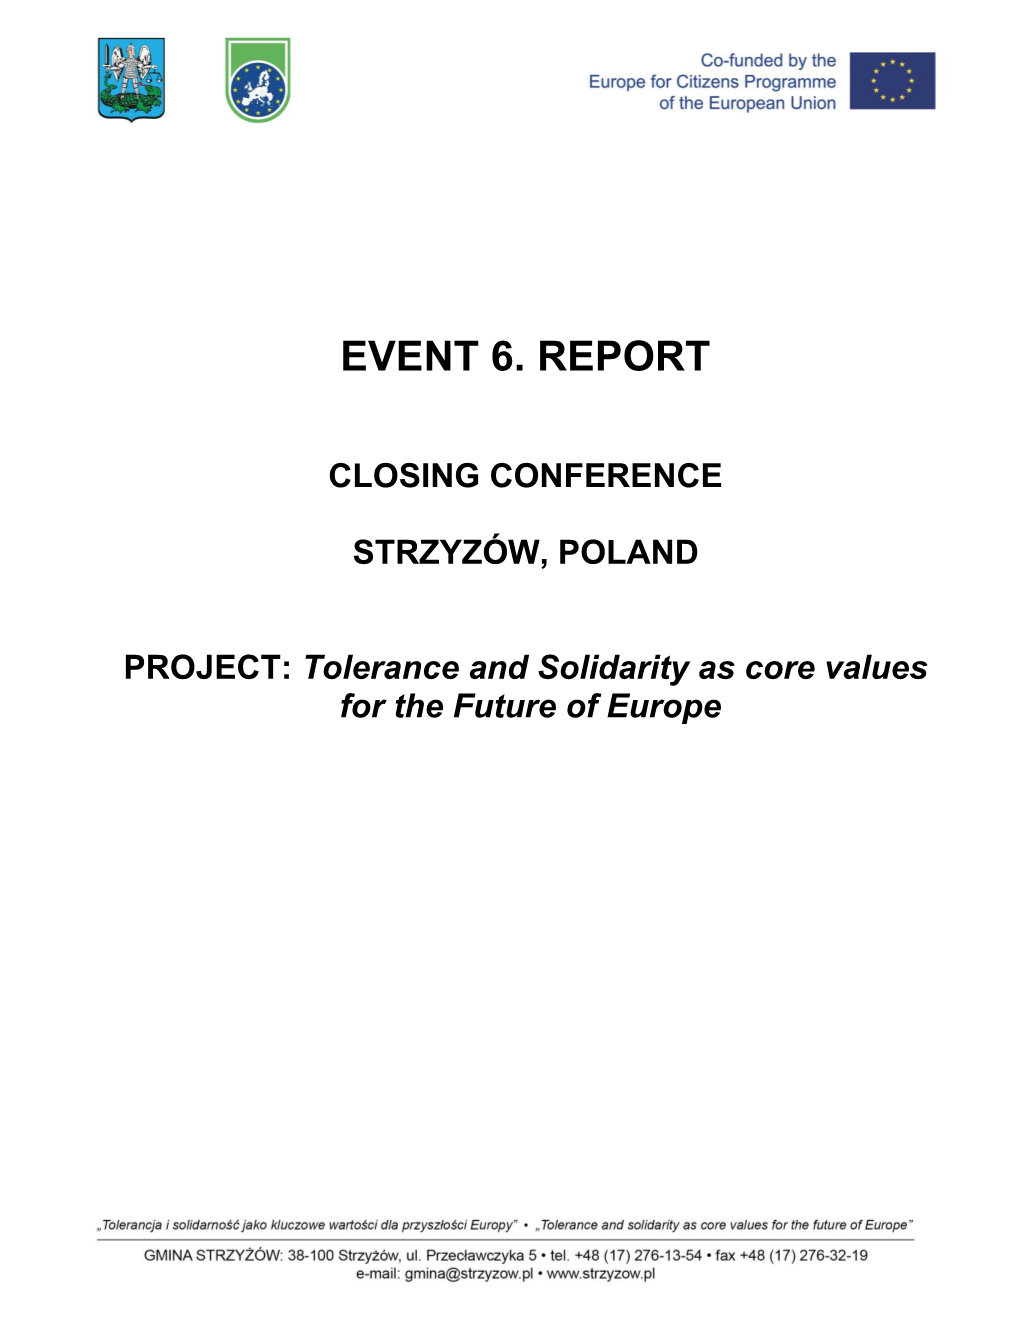 Event 6. Report